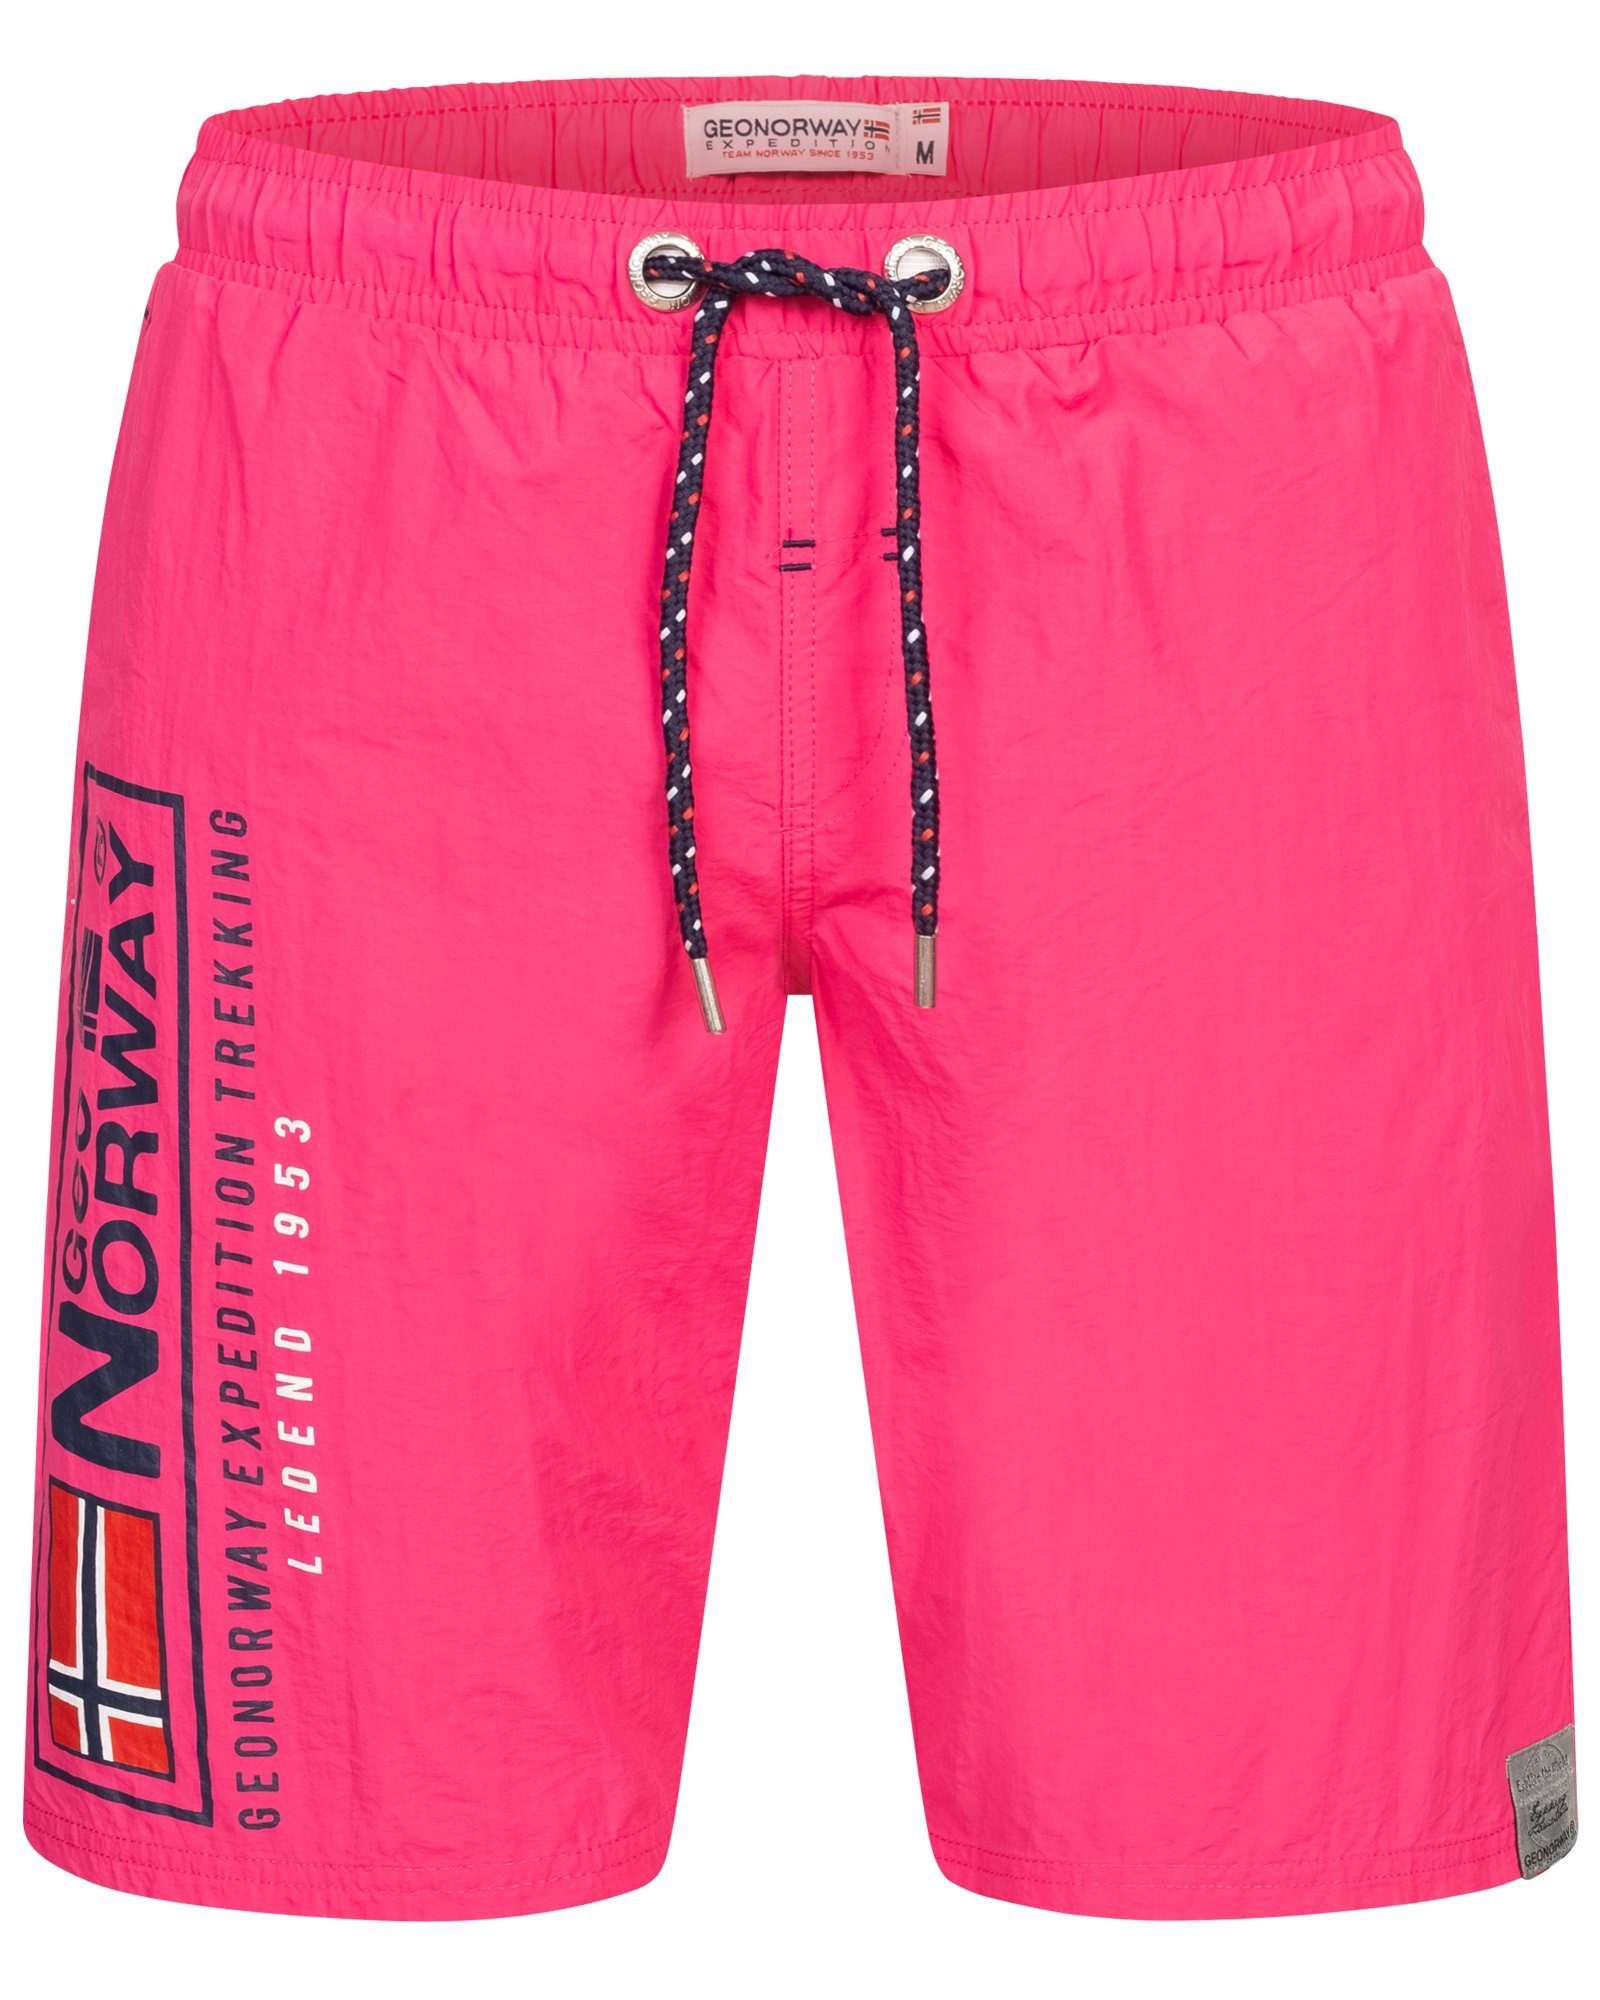 Geographical Norway Badeshorts Herren Bade Hose Bade Shorts Schwimm Shorts Sommer Lang Bermuda Beach Pink